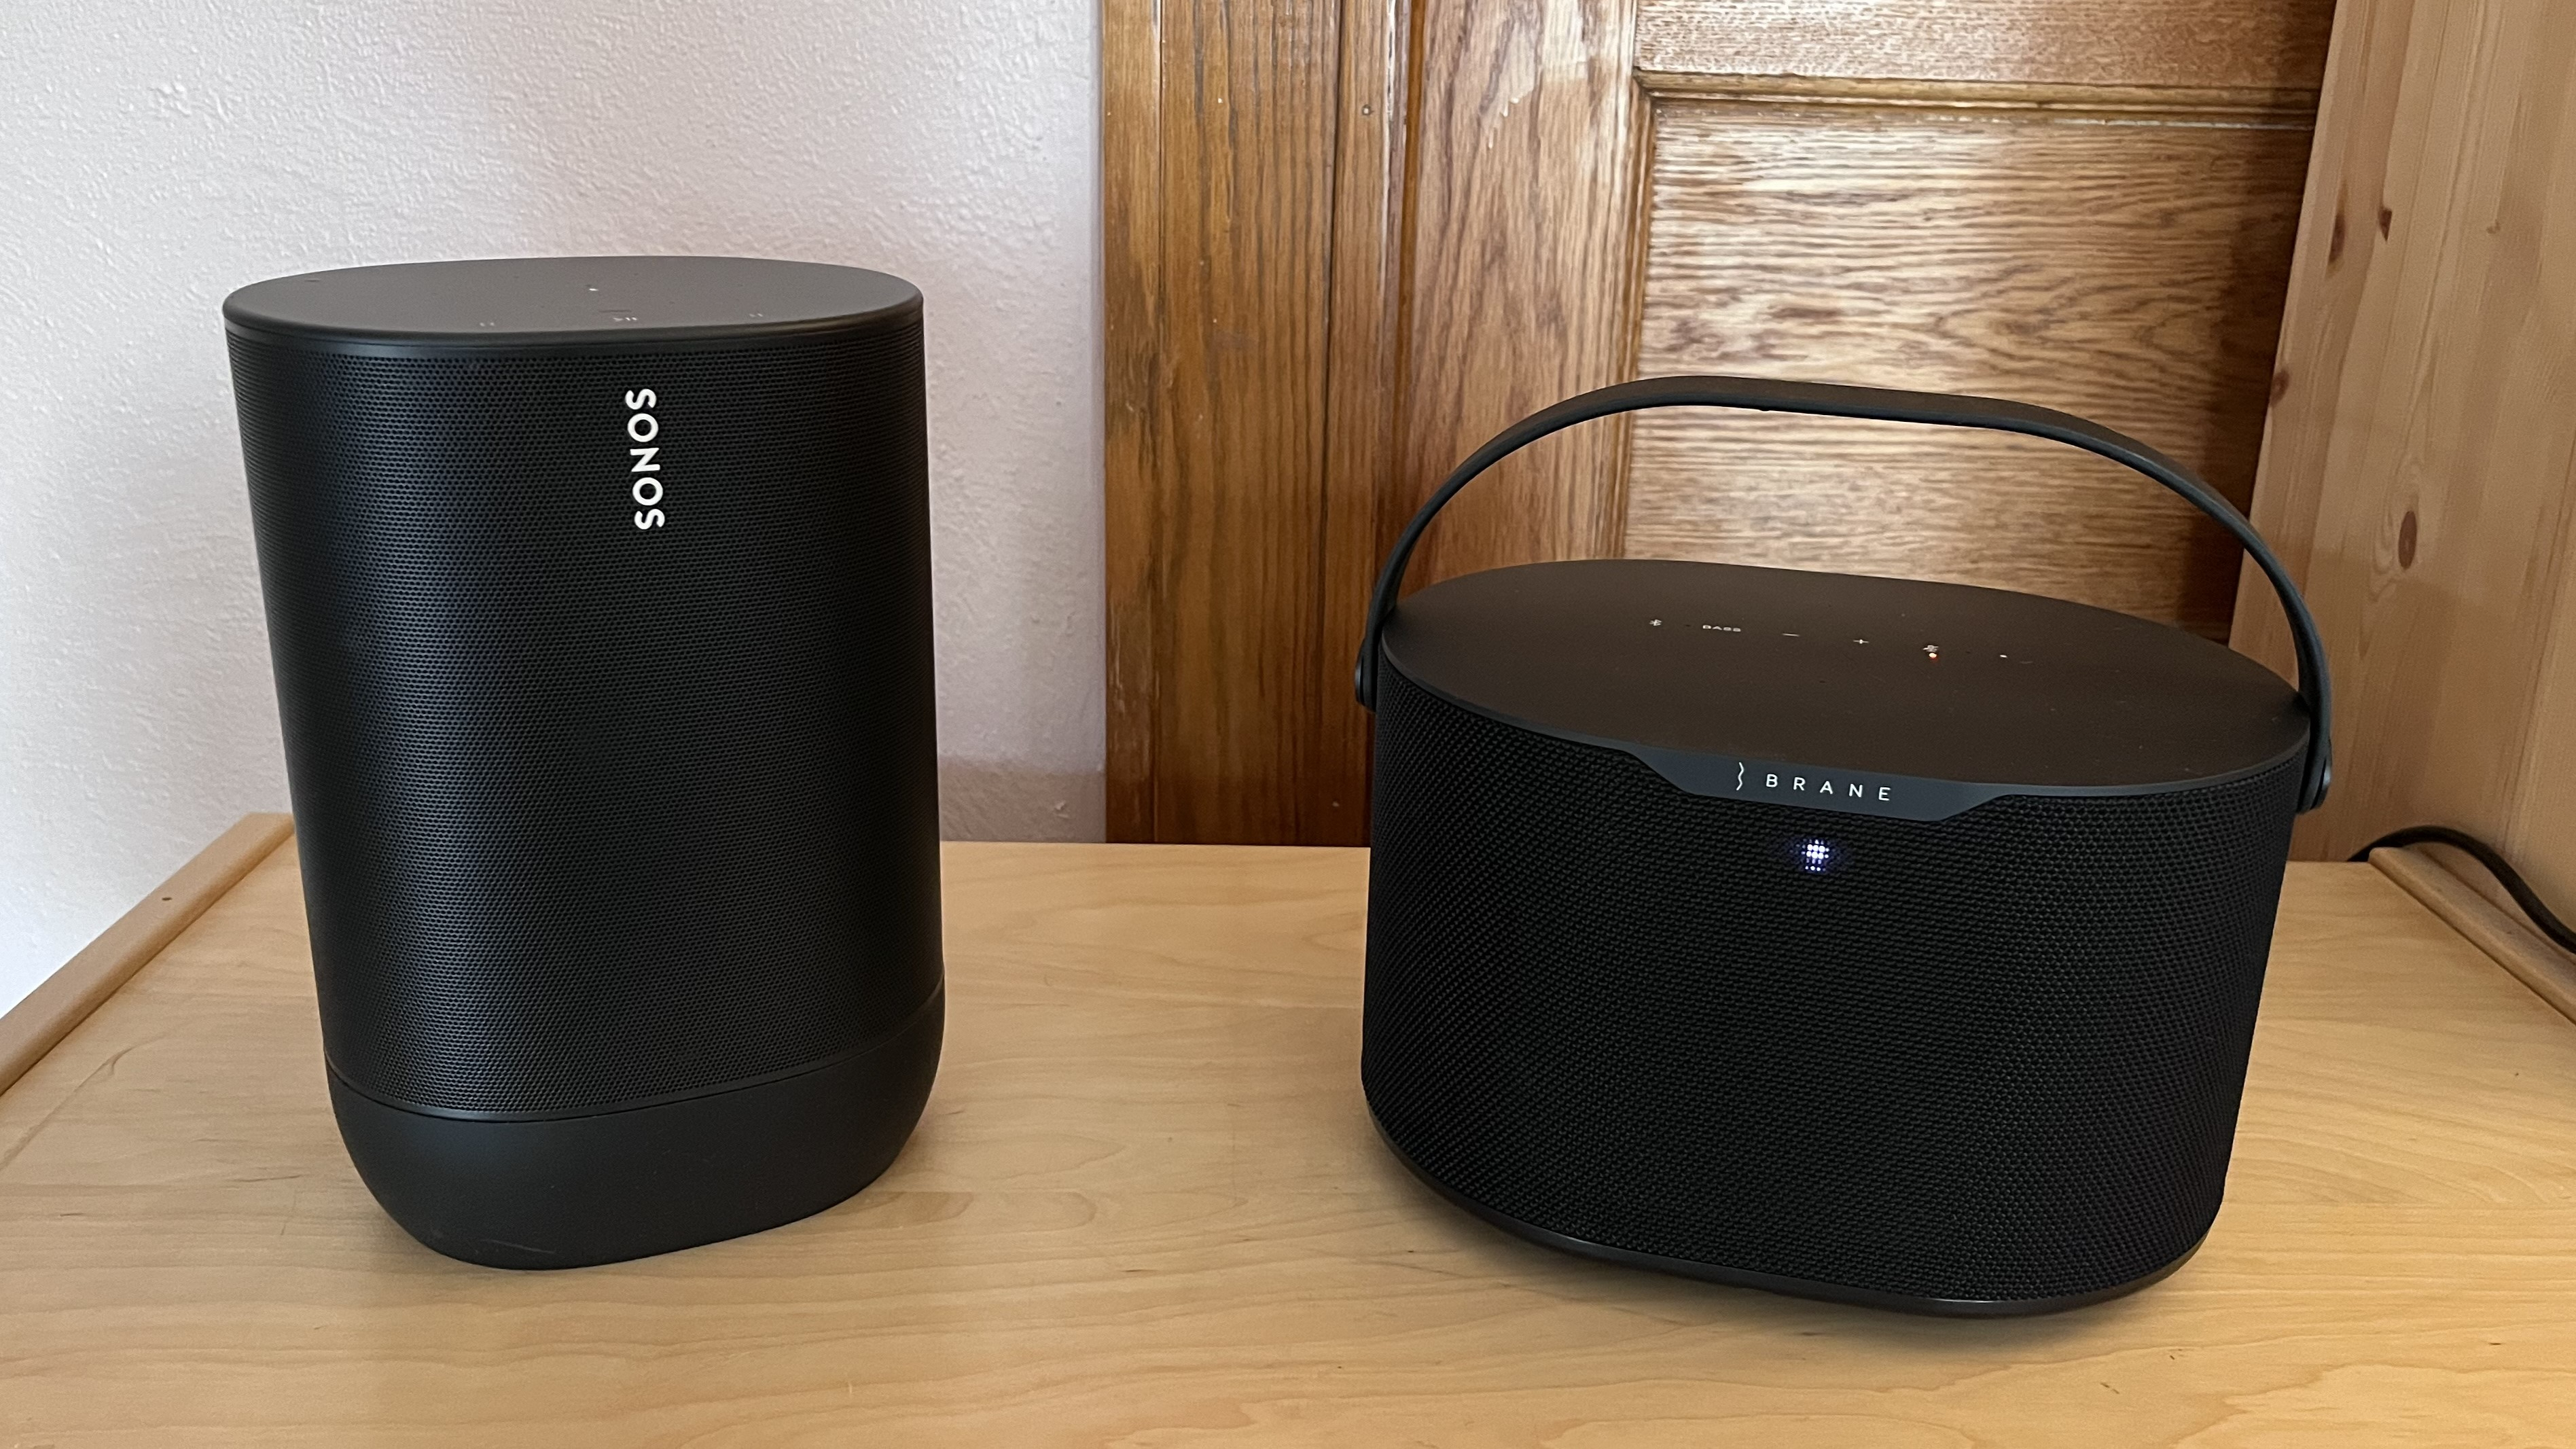 Brane X smart speaker on table next to Sonos Move